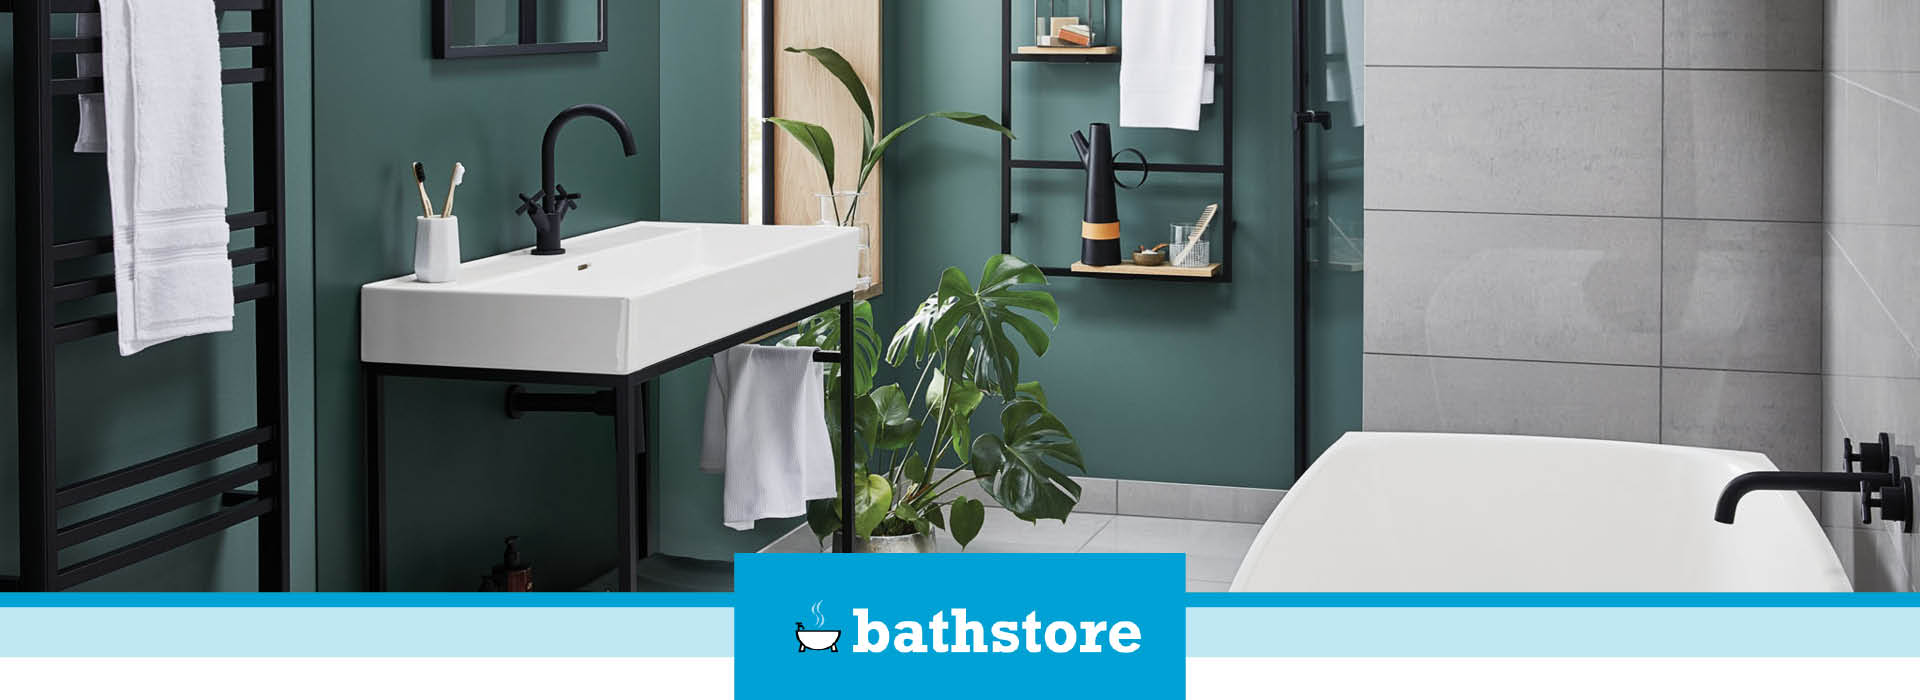 Bathstore Homebase